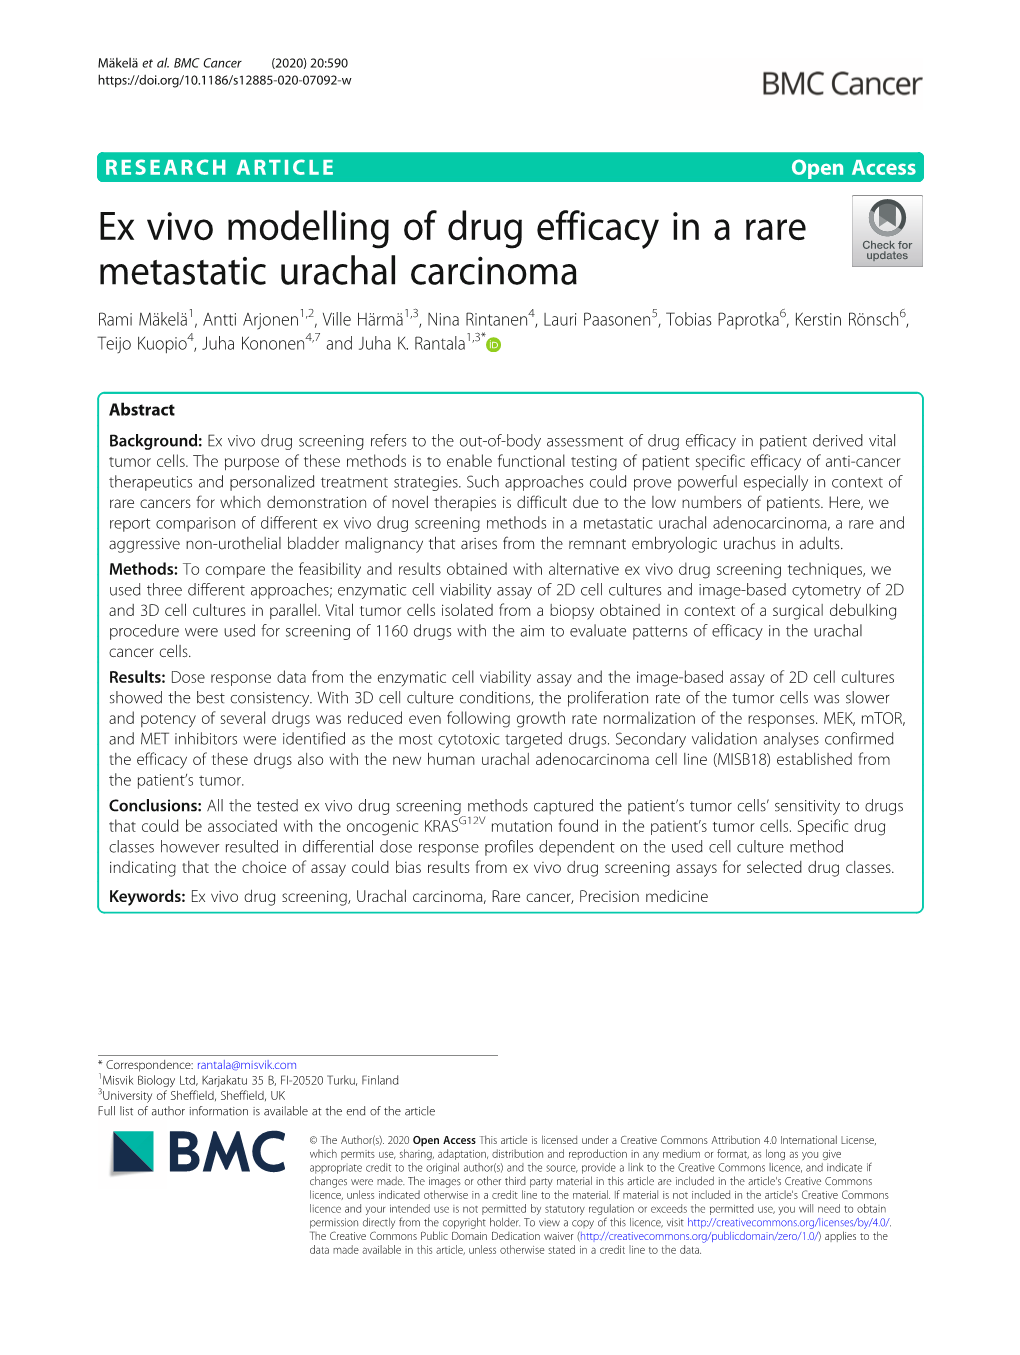 Ex Vivo Modelling of Drug Efficacy in a Rare Metastatic Urachal Carcinoma